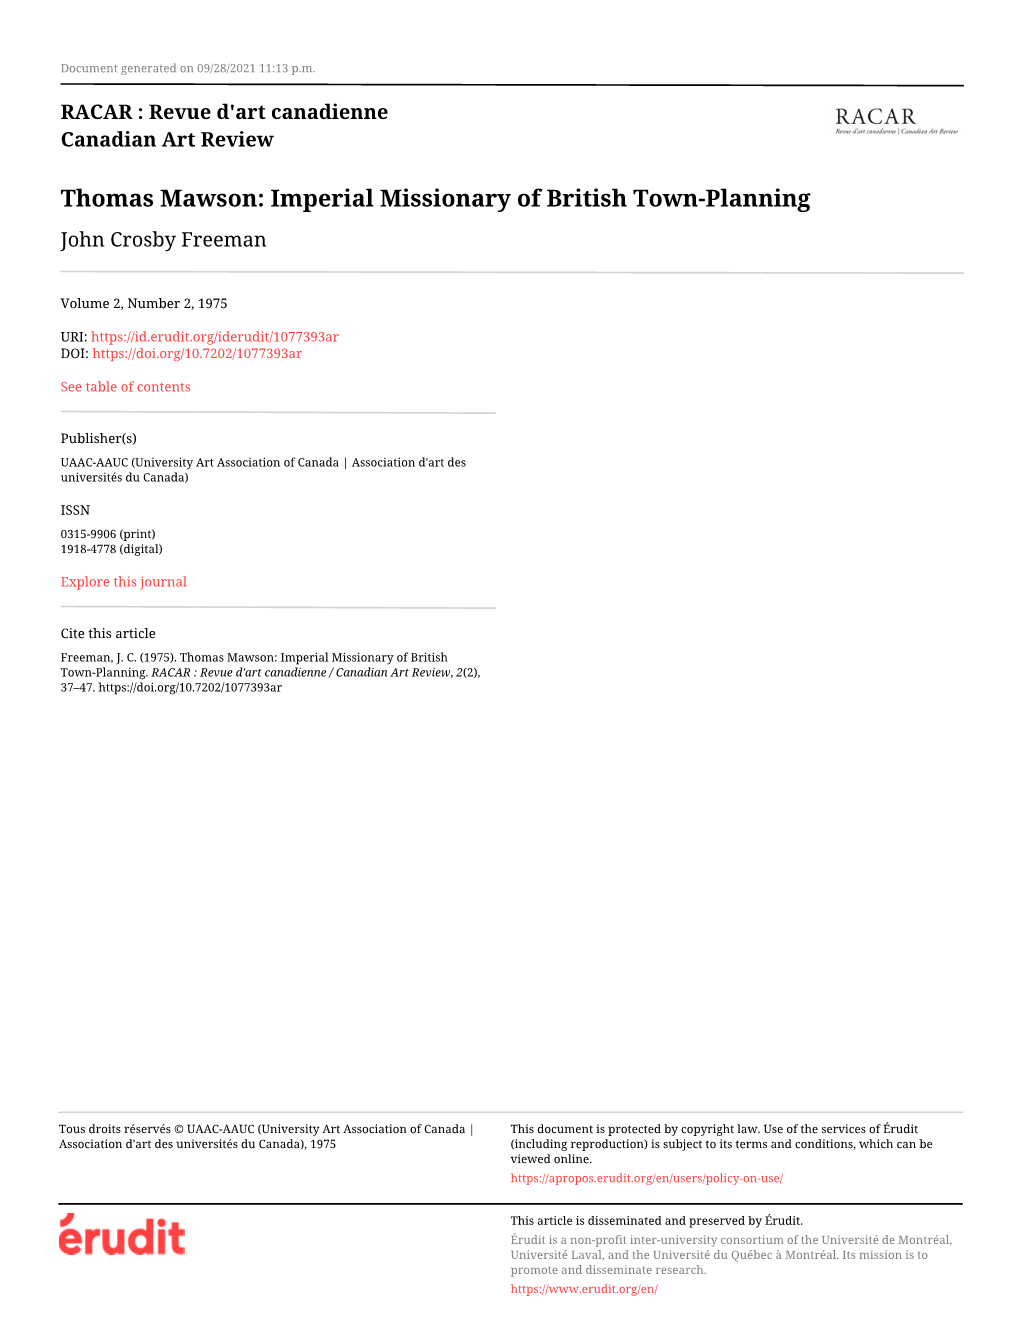 Thomas Mawson: Imperial Missionary of British Town-Planning John Crosby Freeman